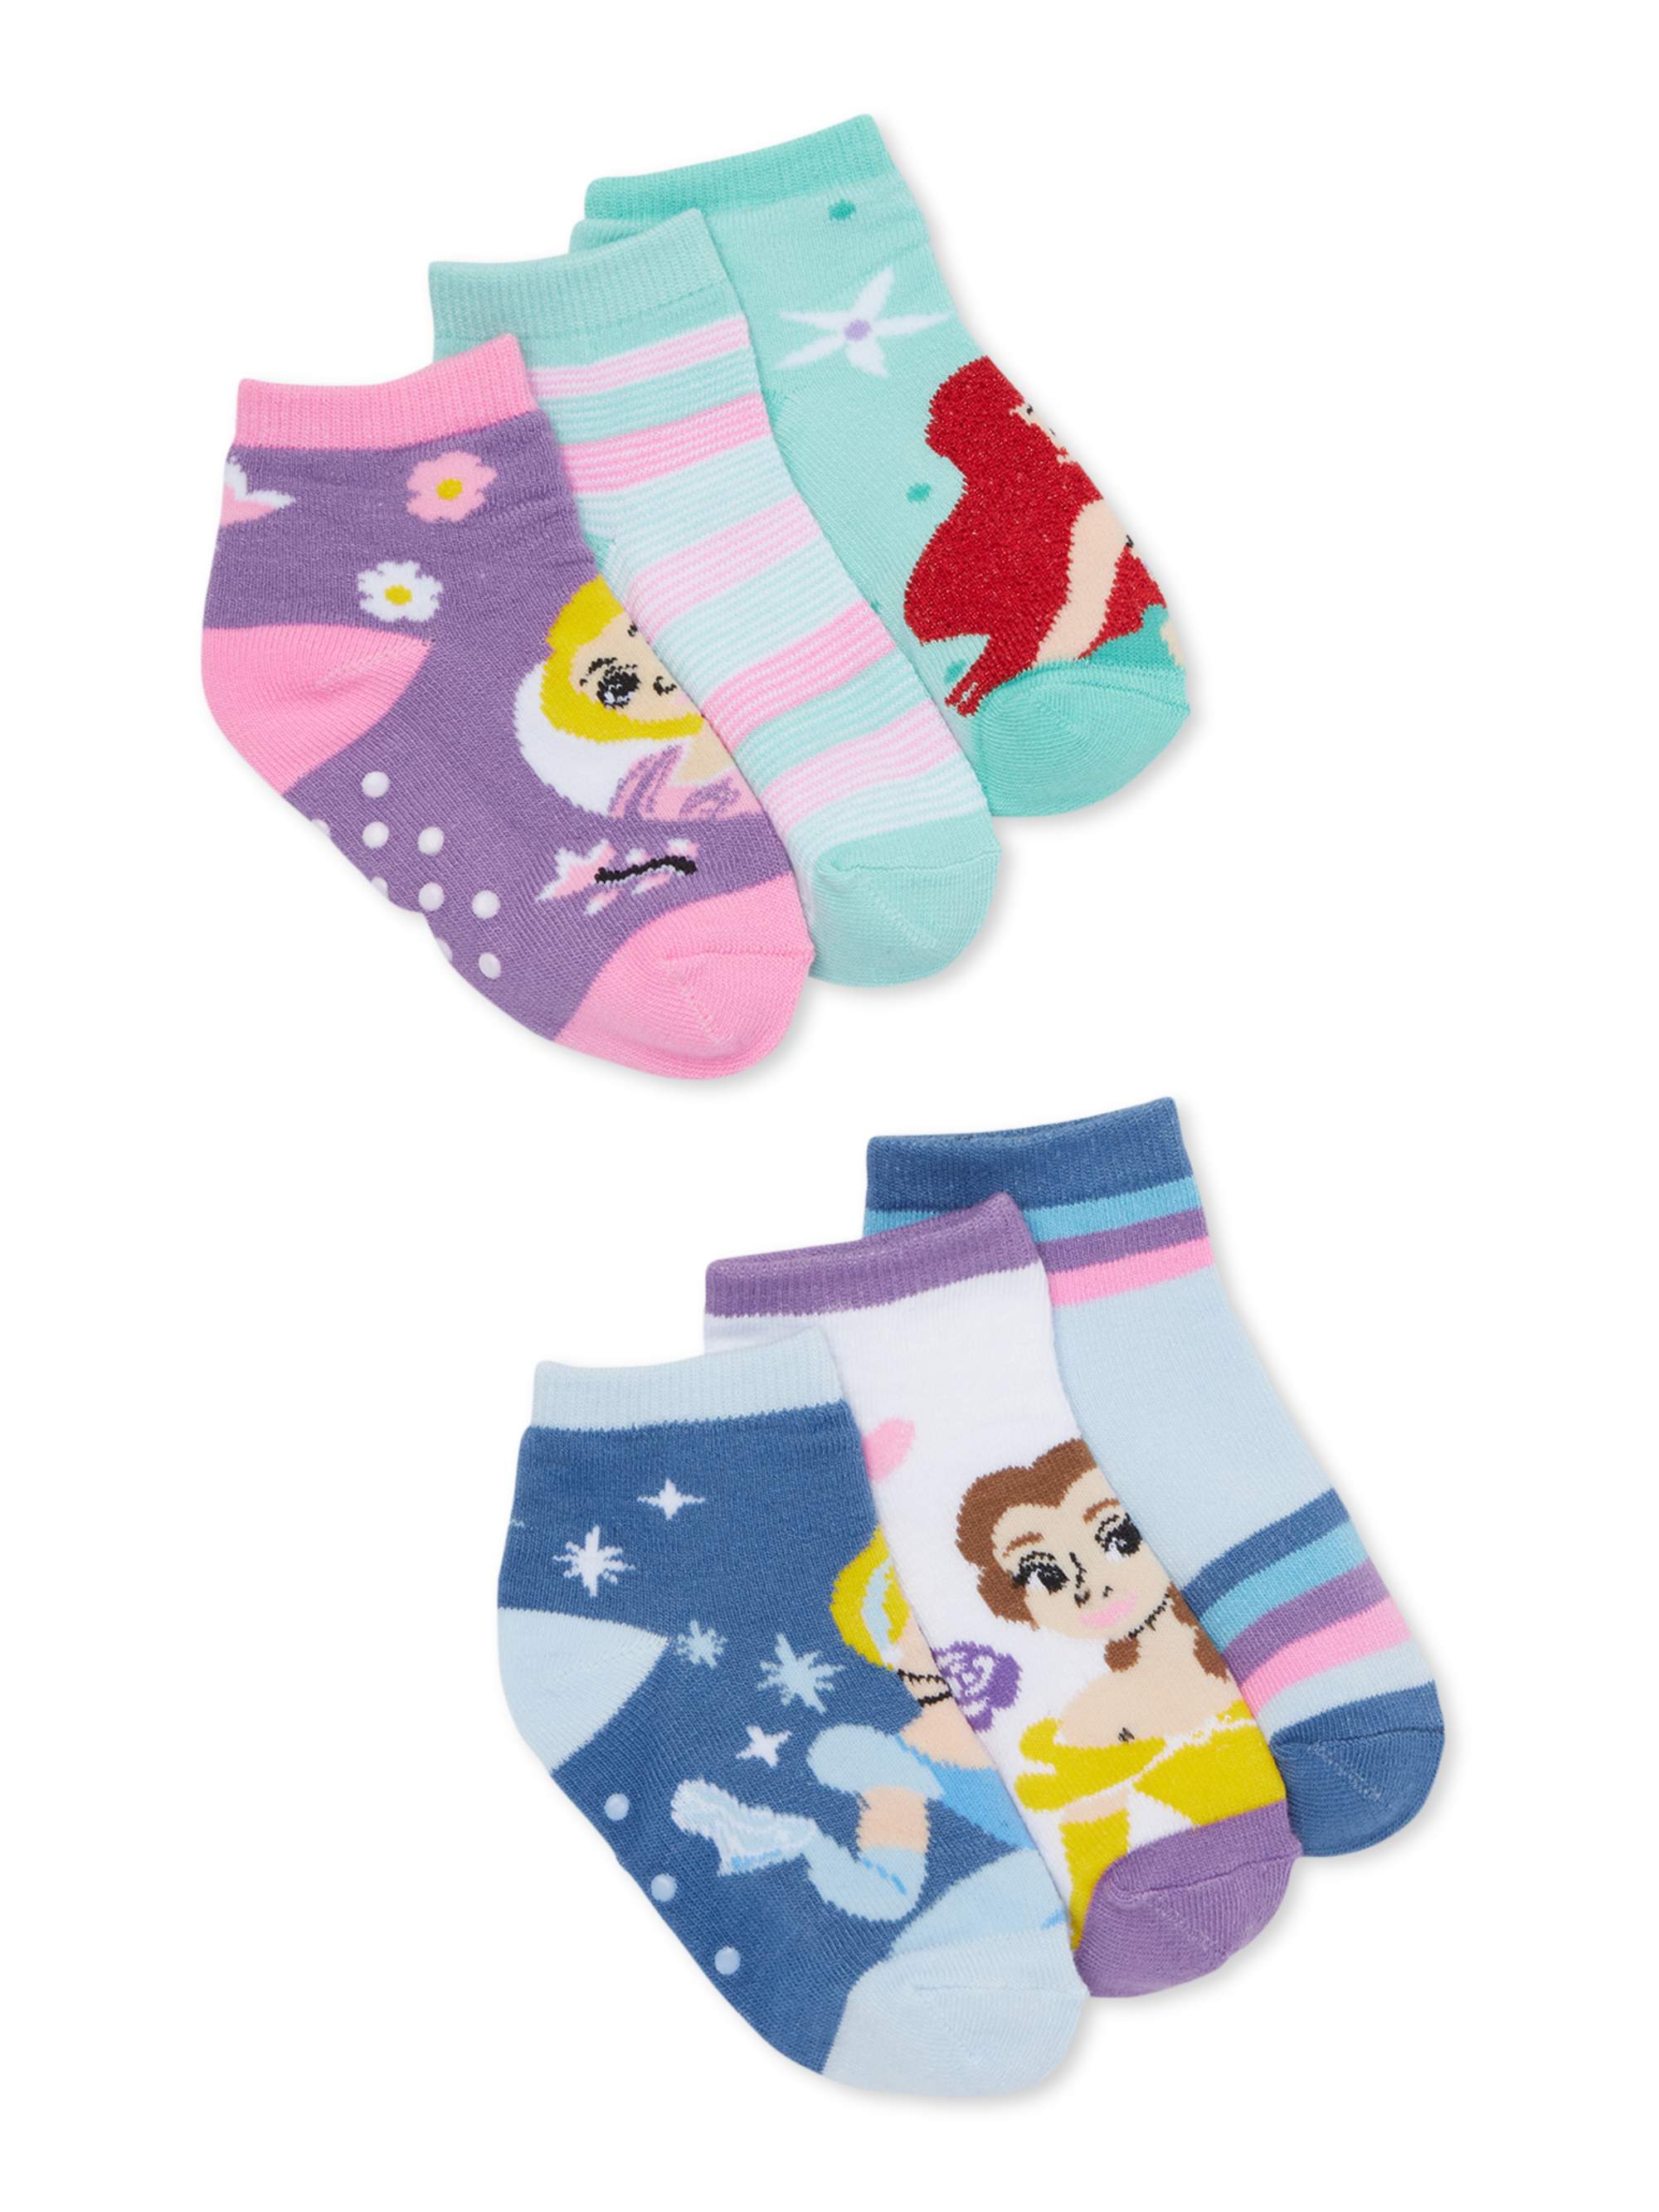 Disney Princess Baby Girls' & Toddler Girls' Quarter Socks, 6 Pack - image 1 of 1